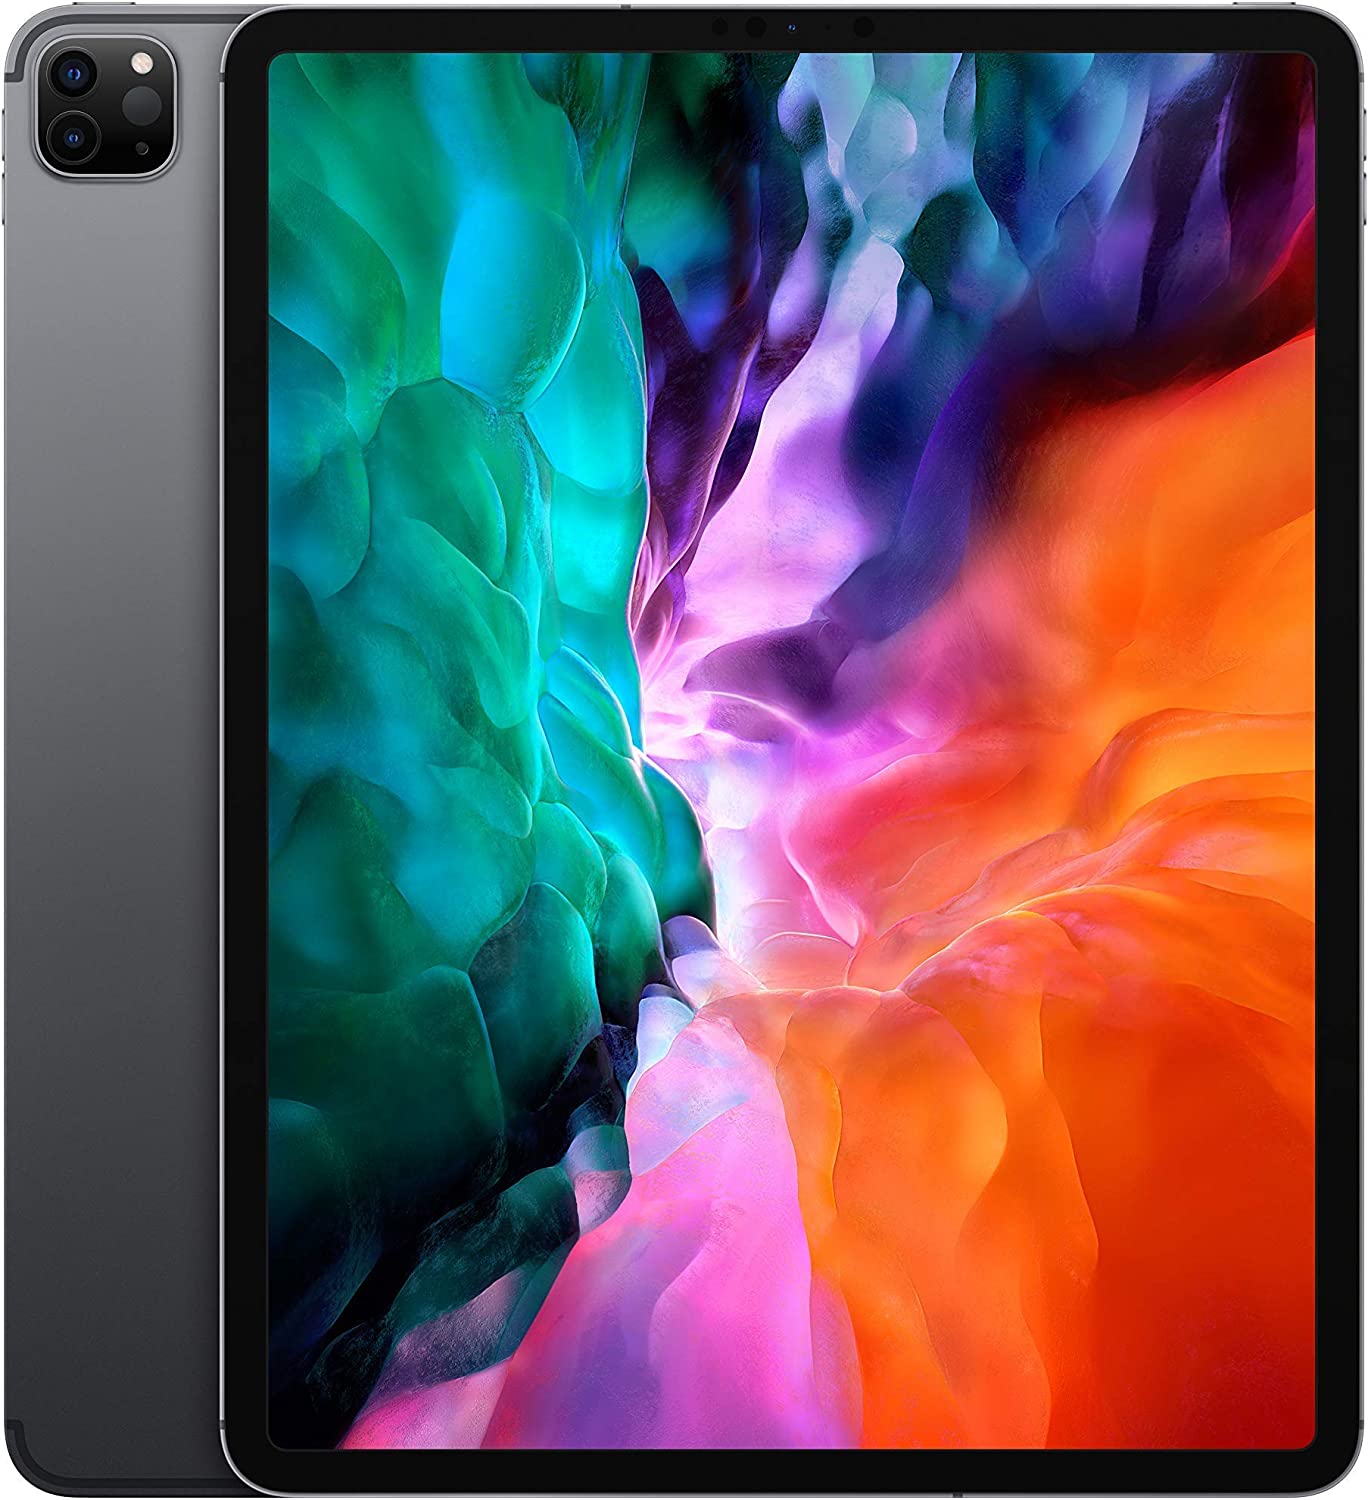 Apple iPad Pro 4th Gen (2020) 12.9in 128GB Wifi + Cellular (Unlocked) - Space Gray (Refurbished)